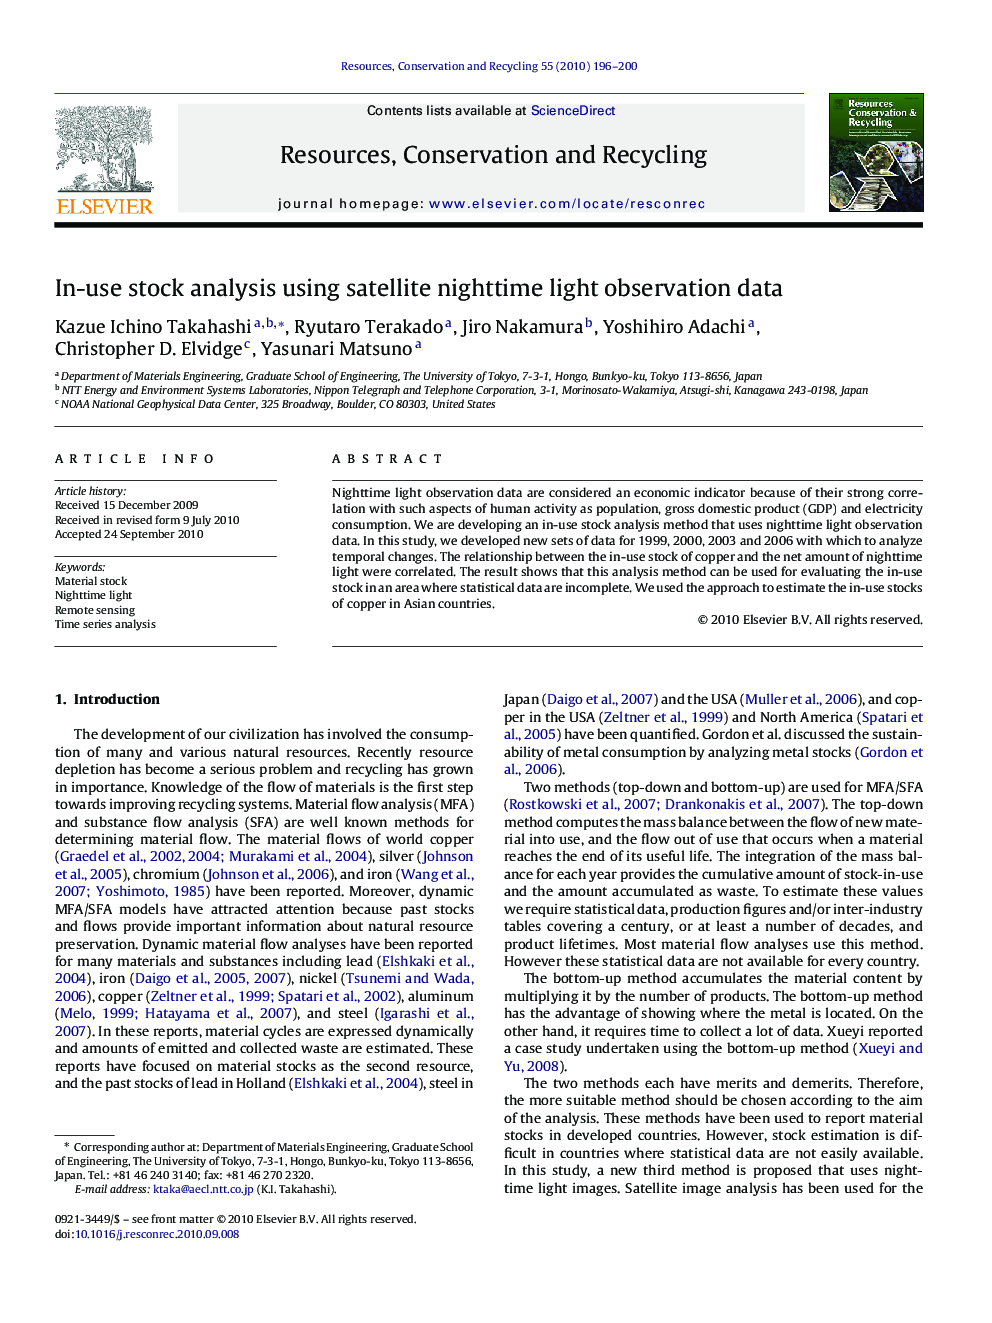 In-use stock analysis using satellite nighttime light observation data